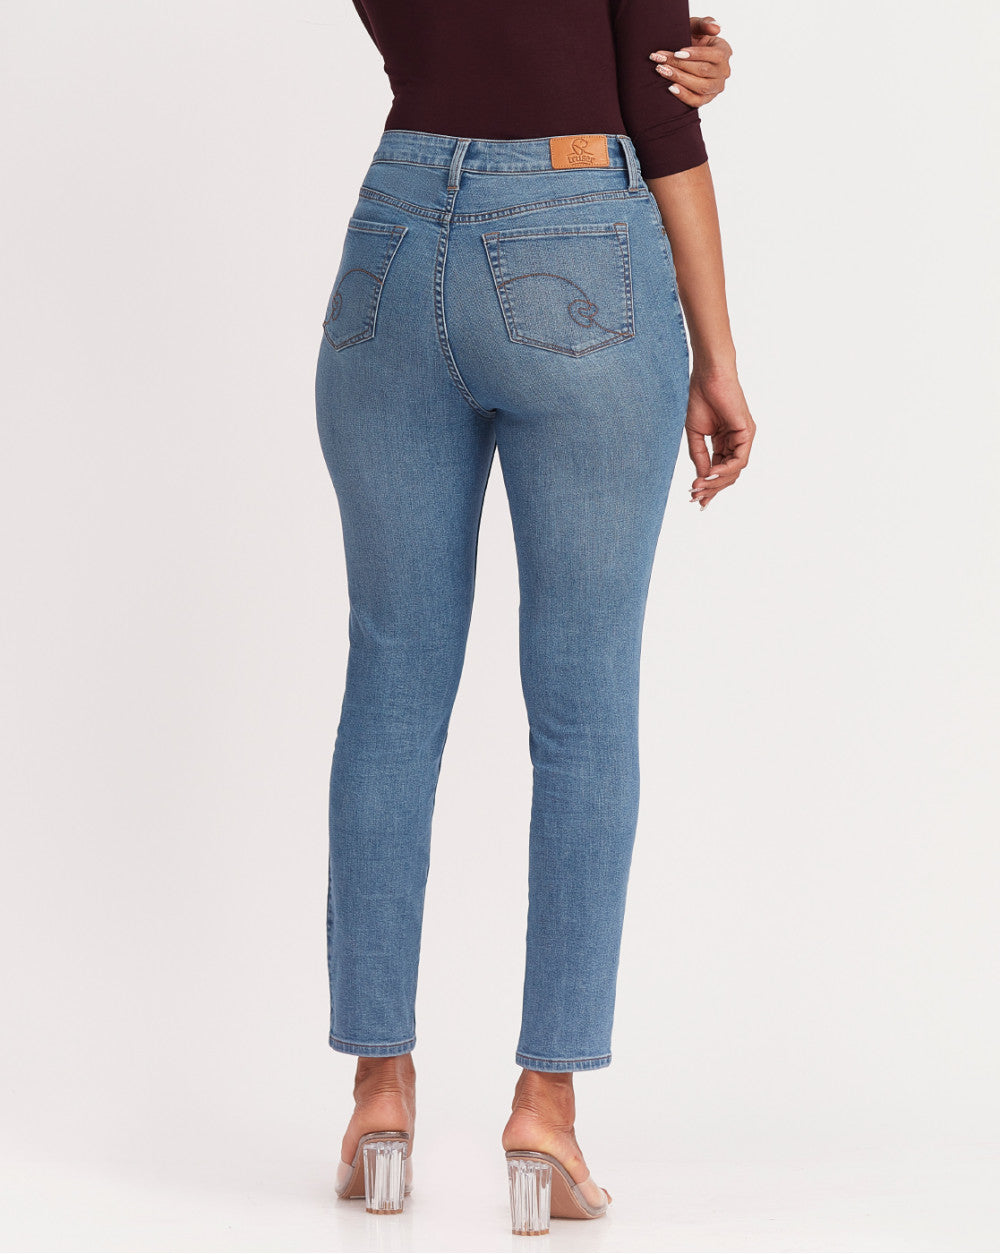 Skinny Fit, Floral Embroidered Jeans - Summer Blue